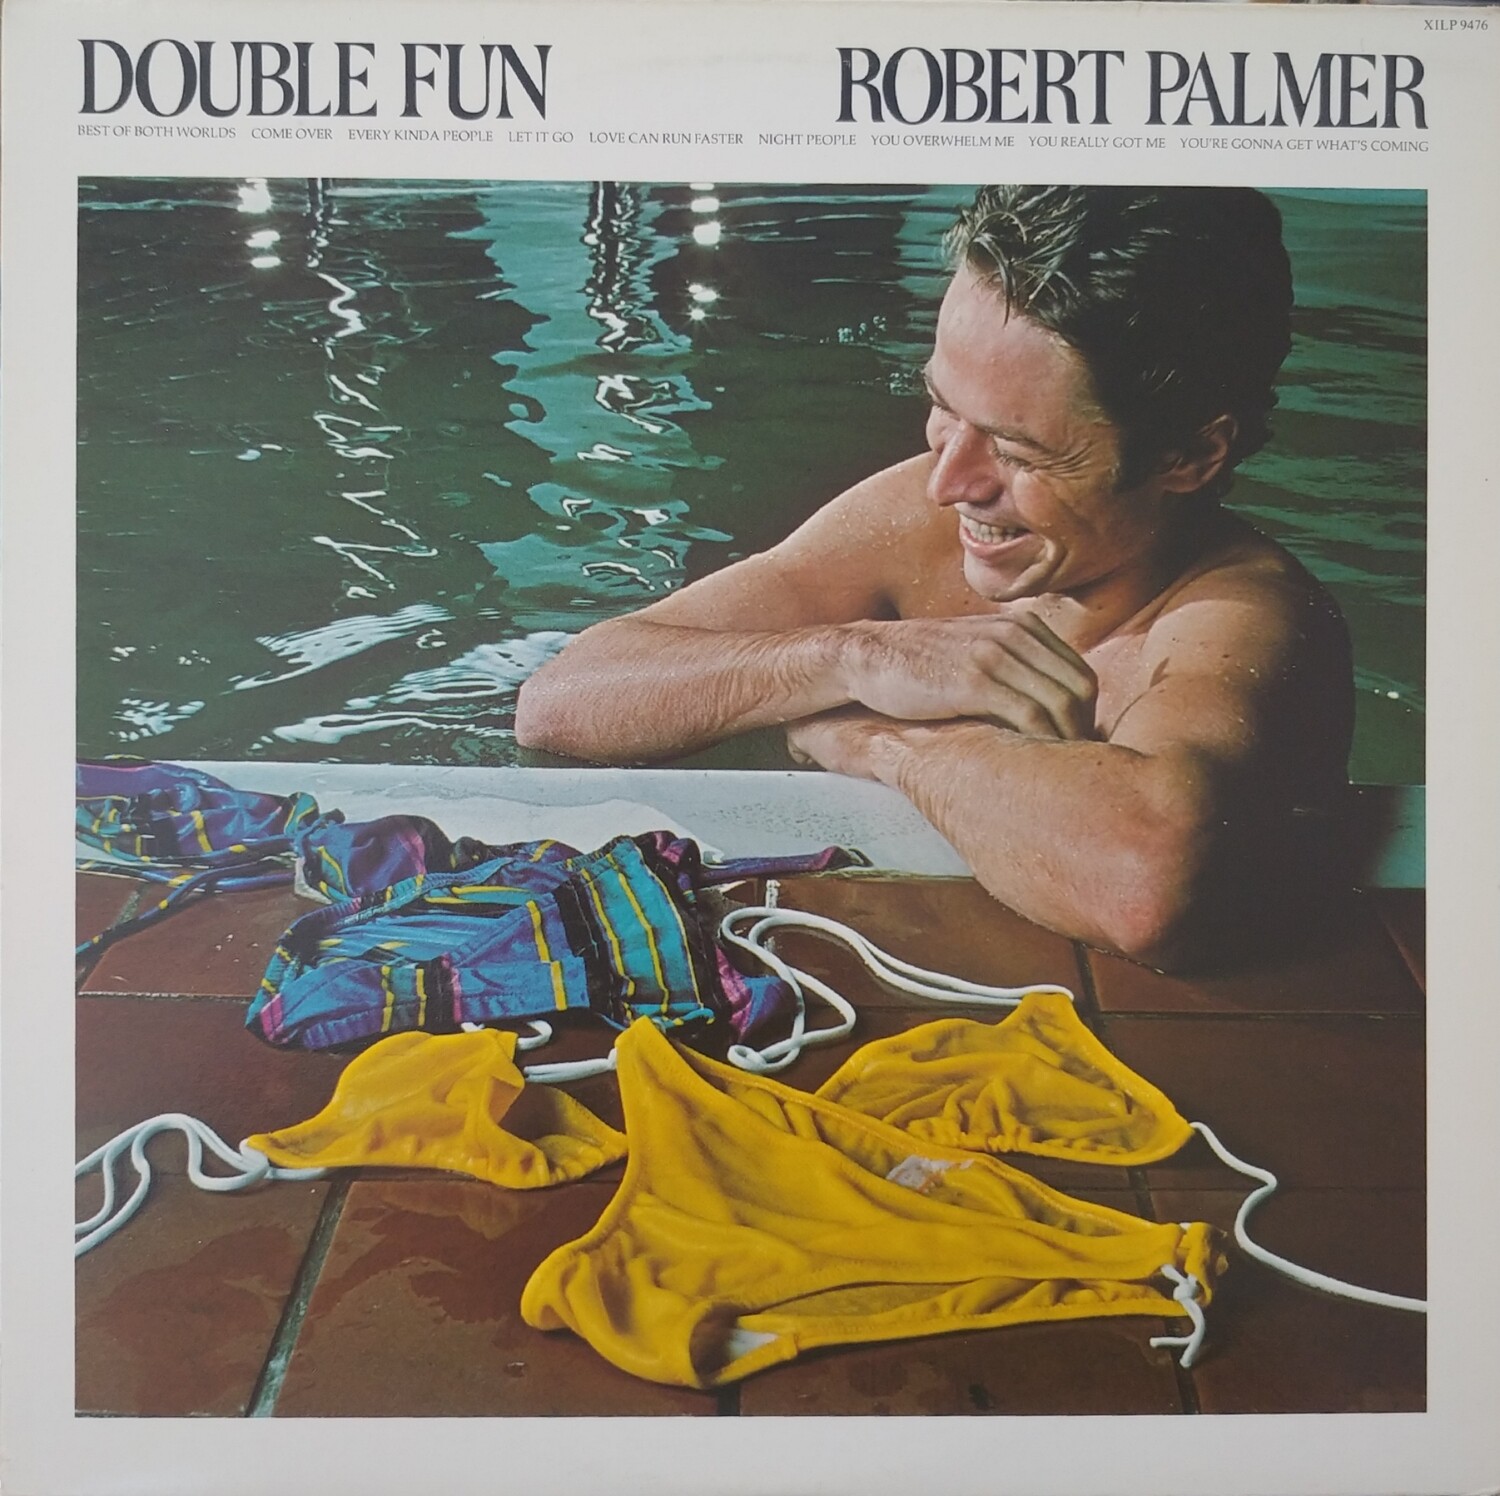 Robert Palmer - Double fun